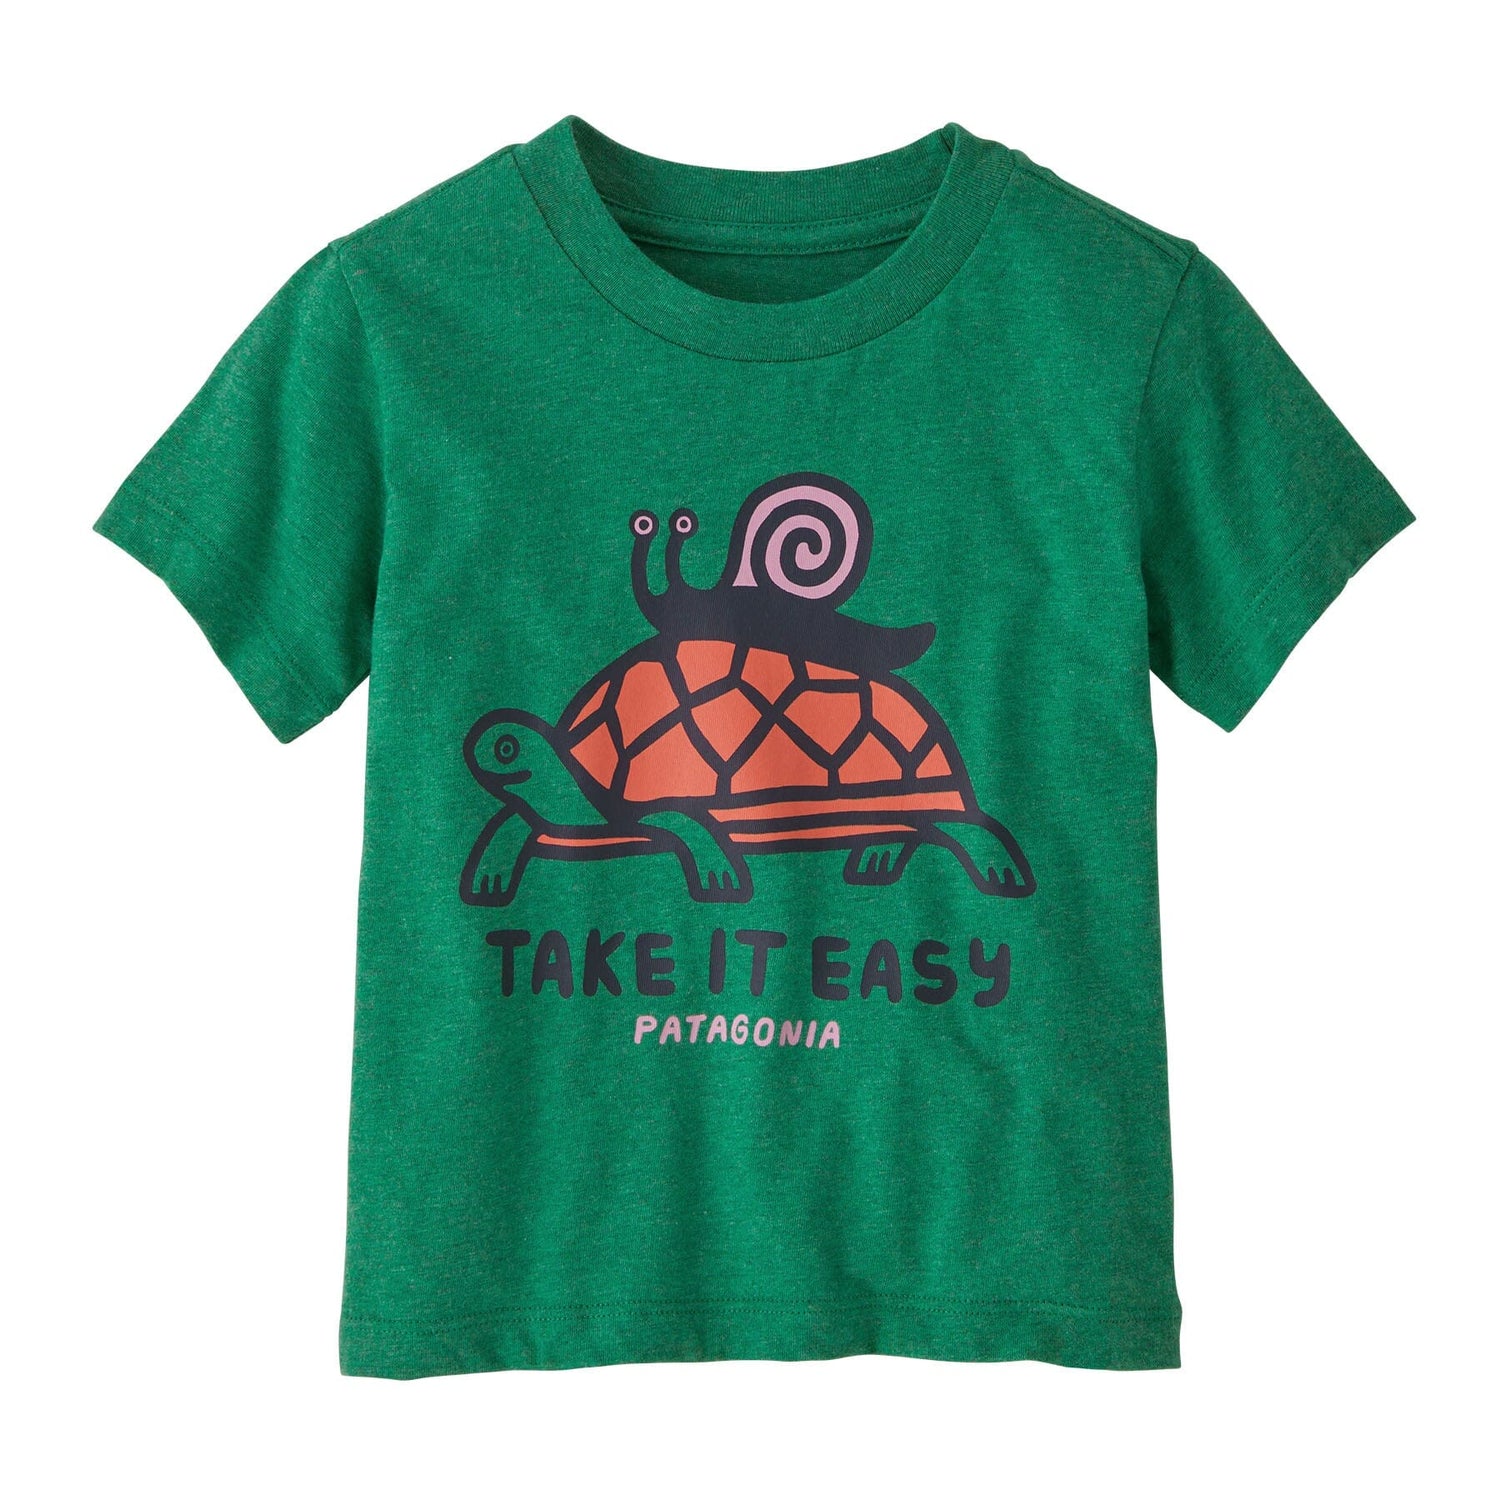 Patagonia - Kids Graphic T-Shirt - 100% Regenerative Organic Certified™ cotton - Weekendbee - sustainable sportswear